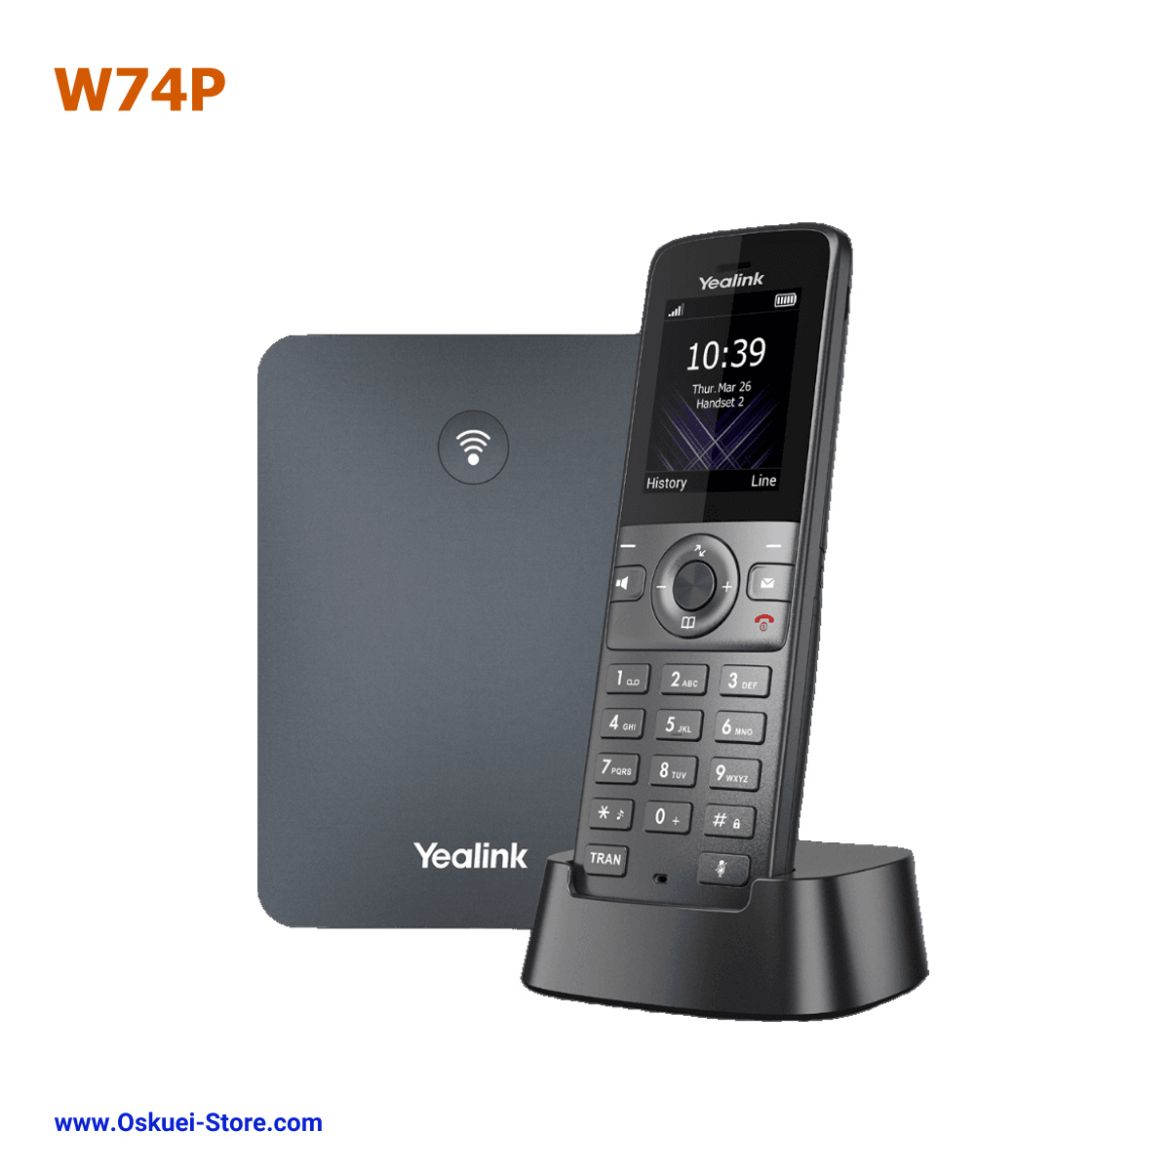 Yealink W74P DECT Phone Black Front